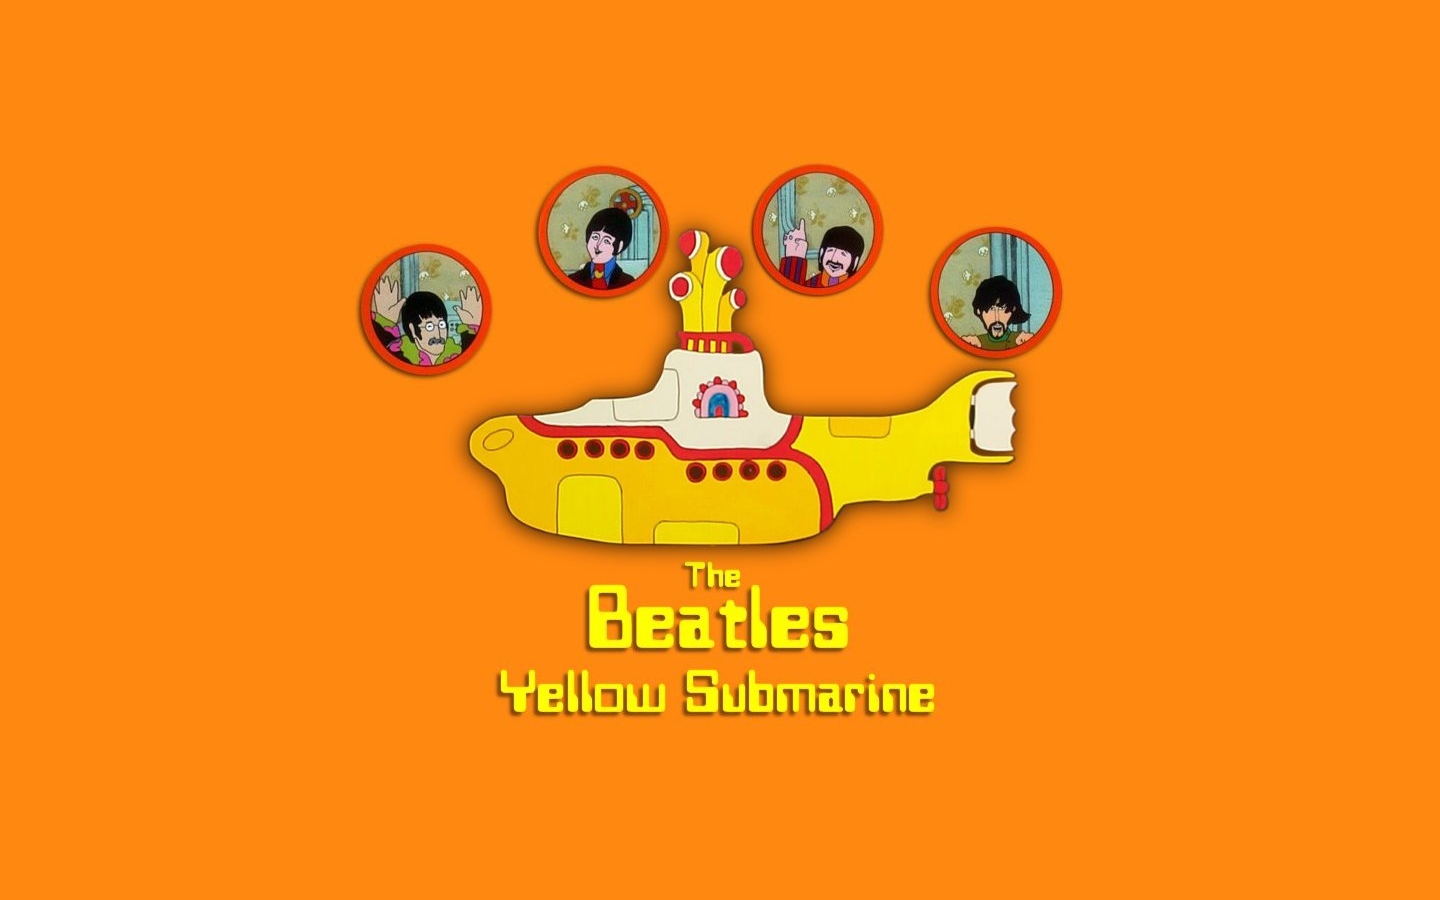 The Beatles Yellow Submarine Wallpaper The Beatles Yellow Submarine